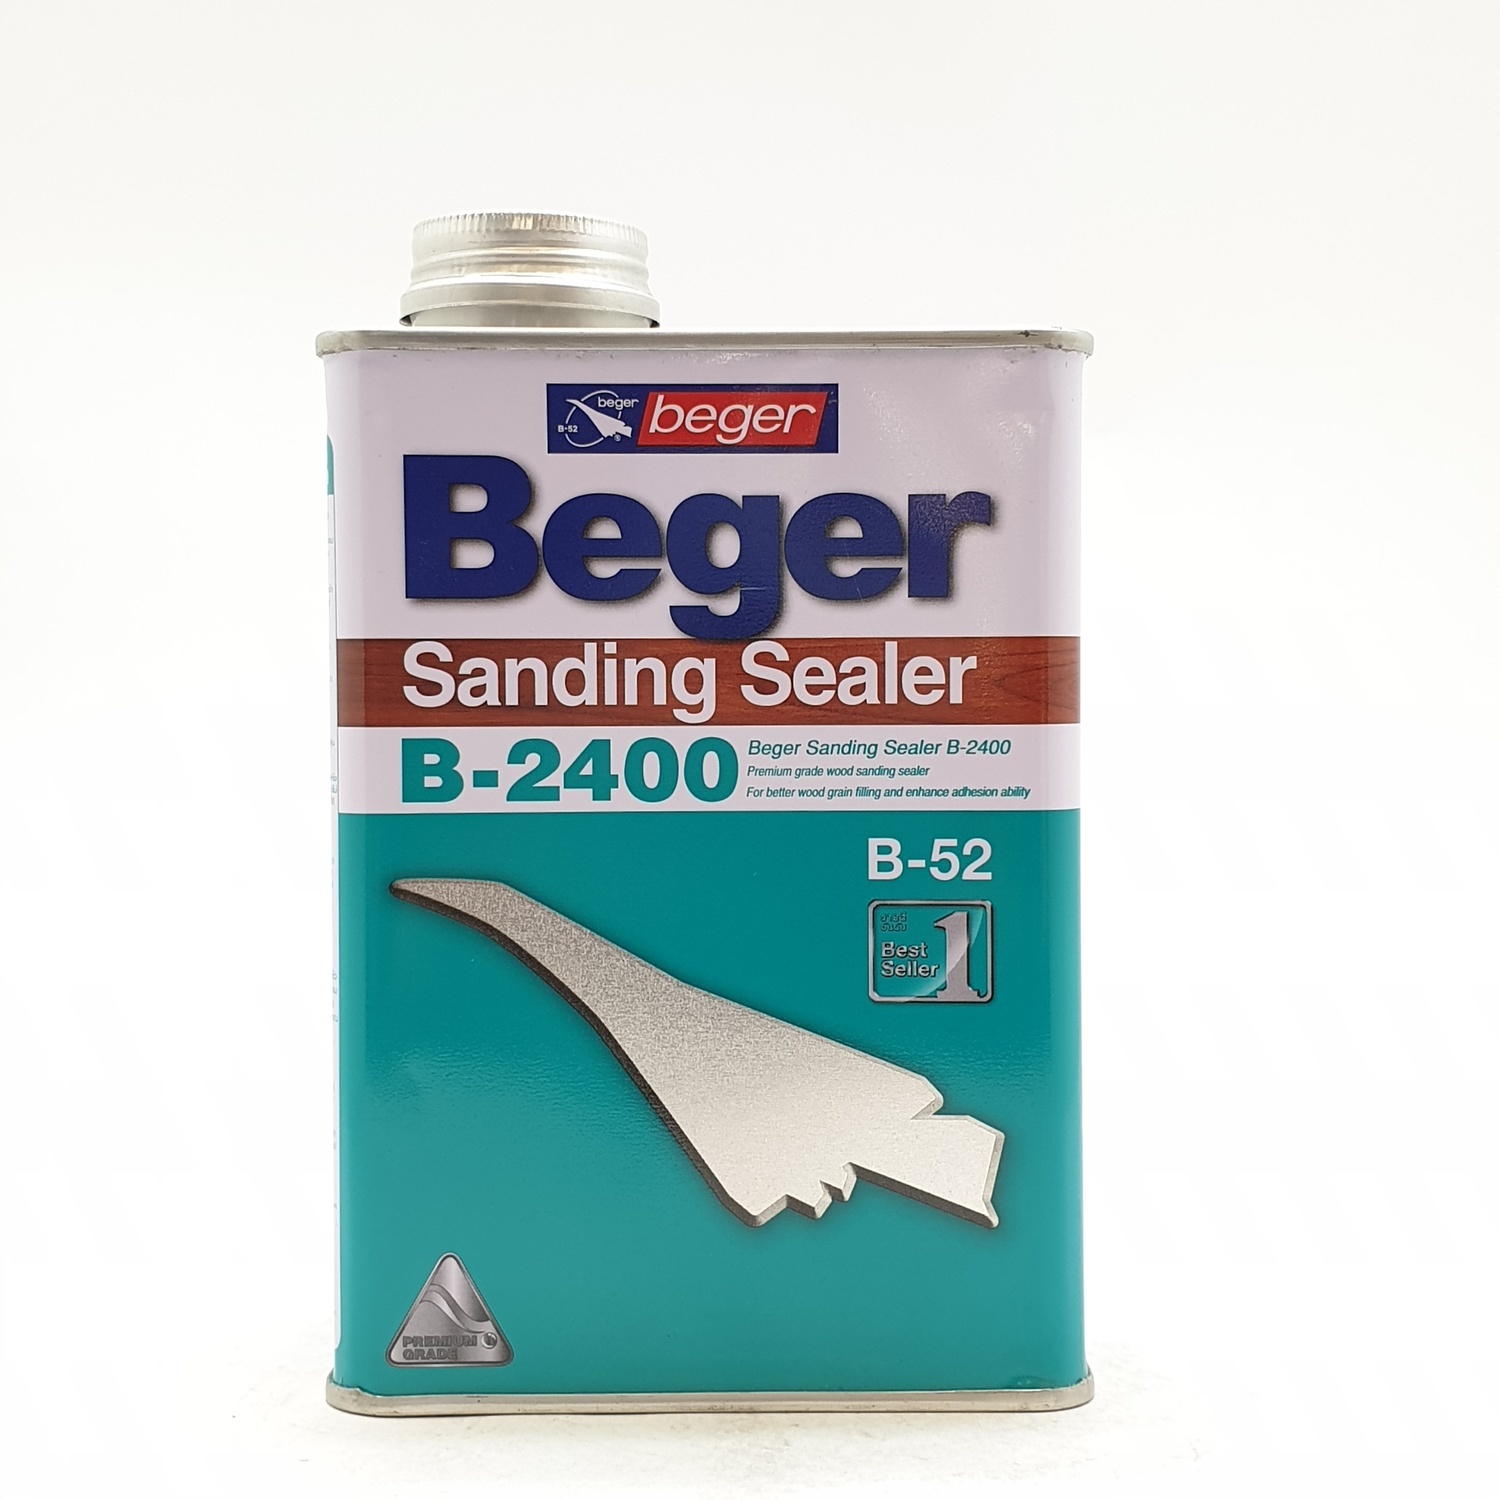 Beger น้ำยารองพื้นไม้อุดร่องเสี้ยน แซนดิ้ง ซีลเลอร์ B-2400 1กป.